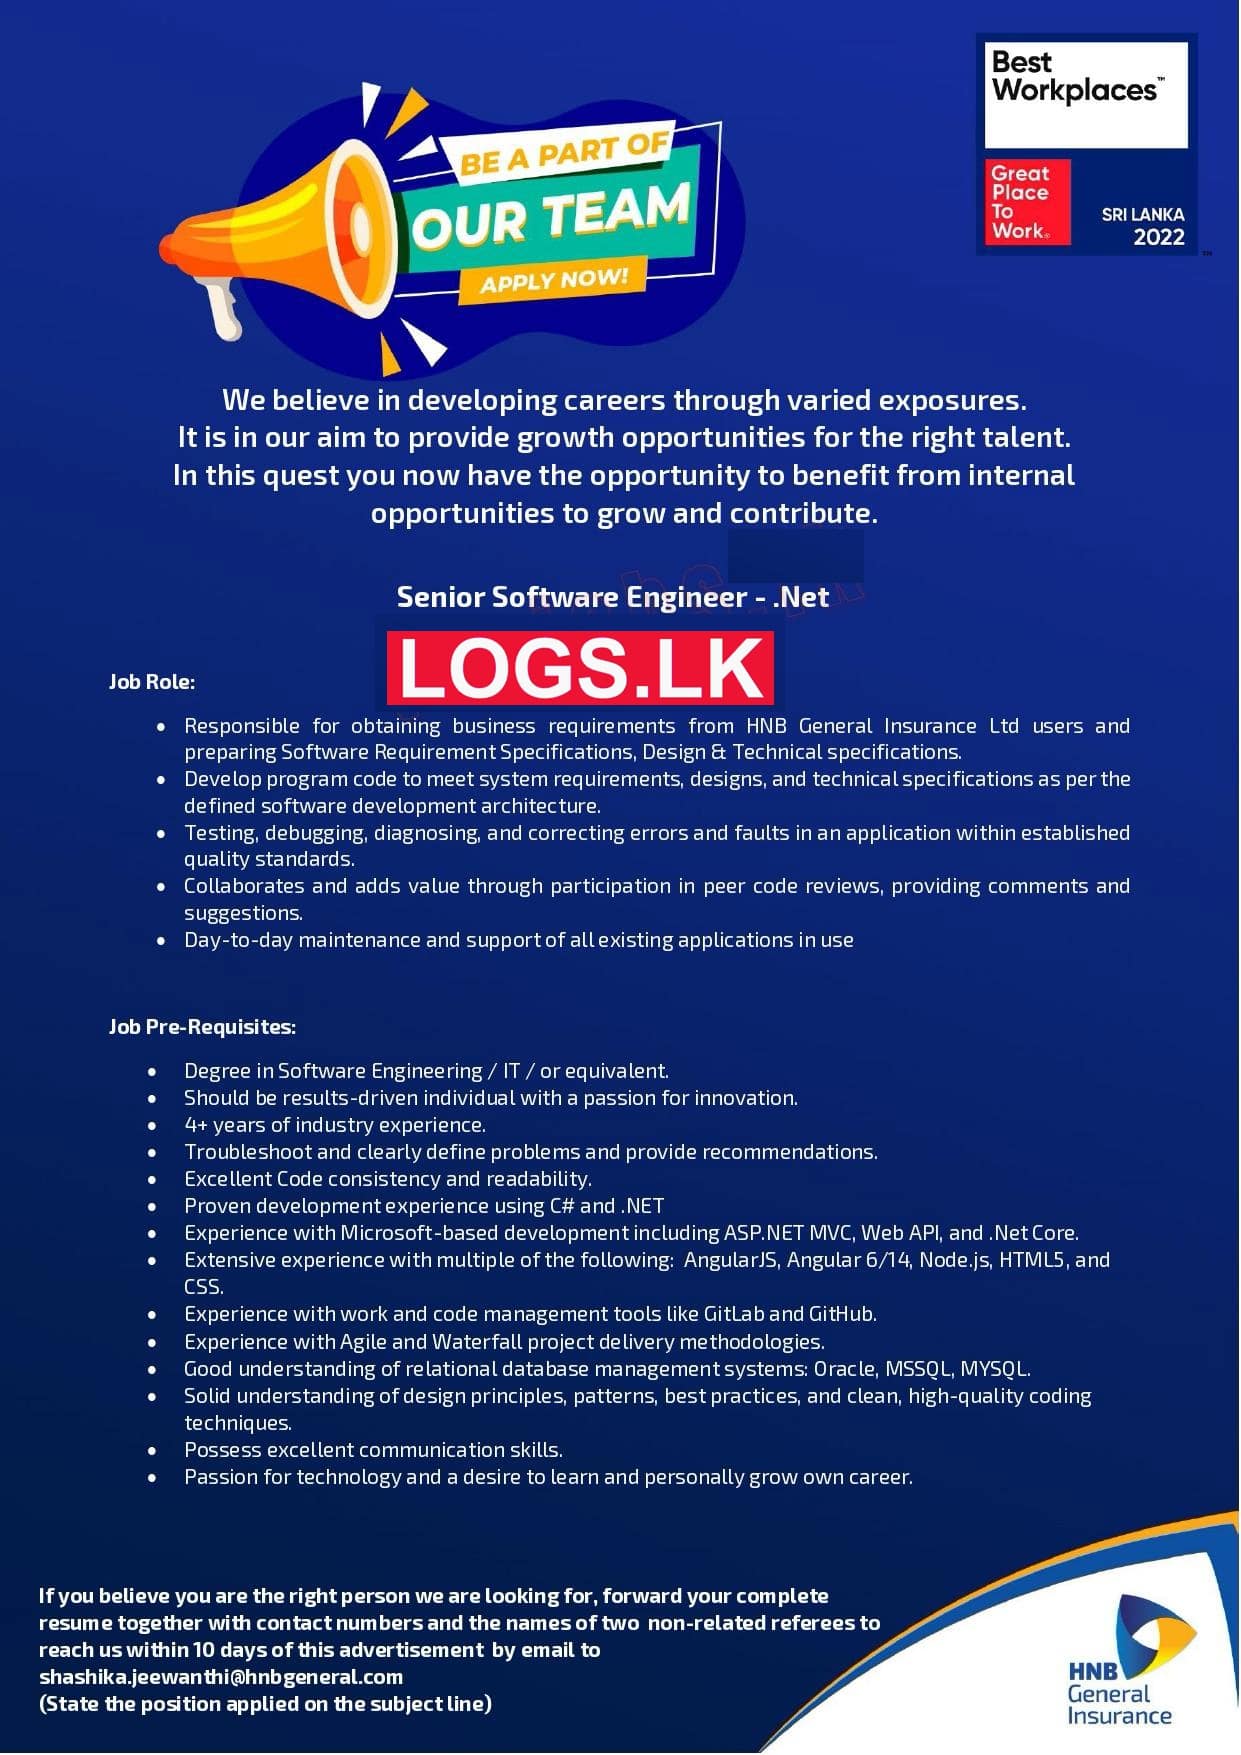 Senior Software Engineer (.Net) Job at HNB General Insurance Job Vacancies in Sri Lanka